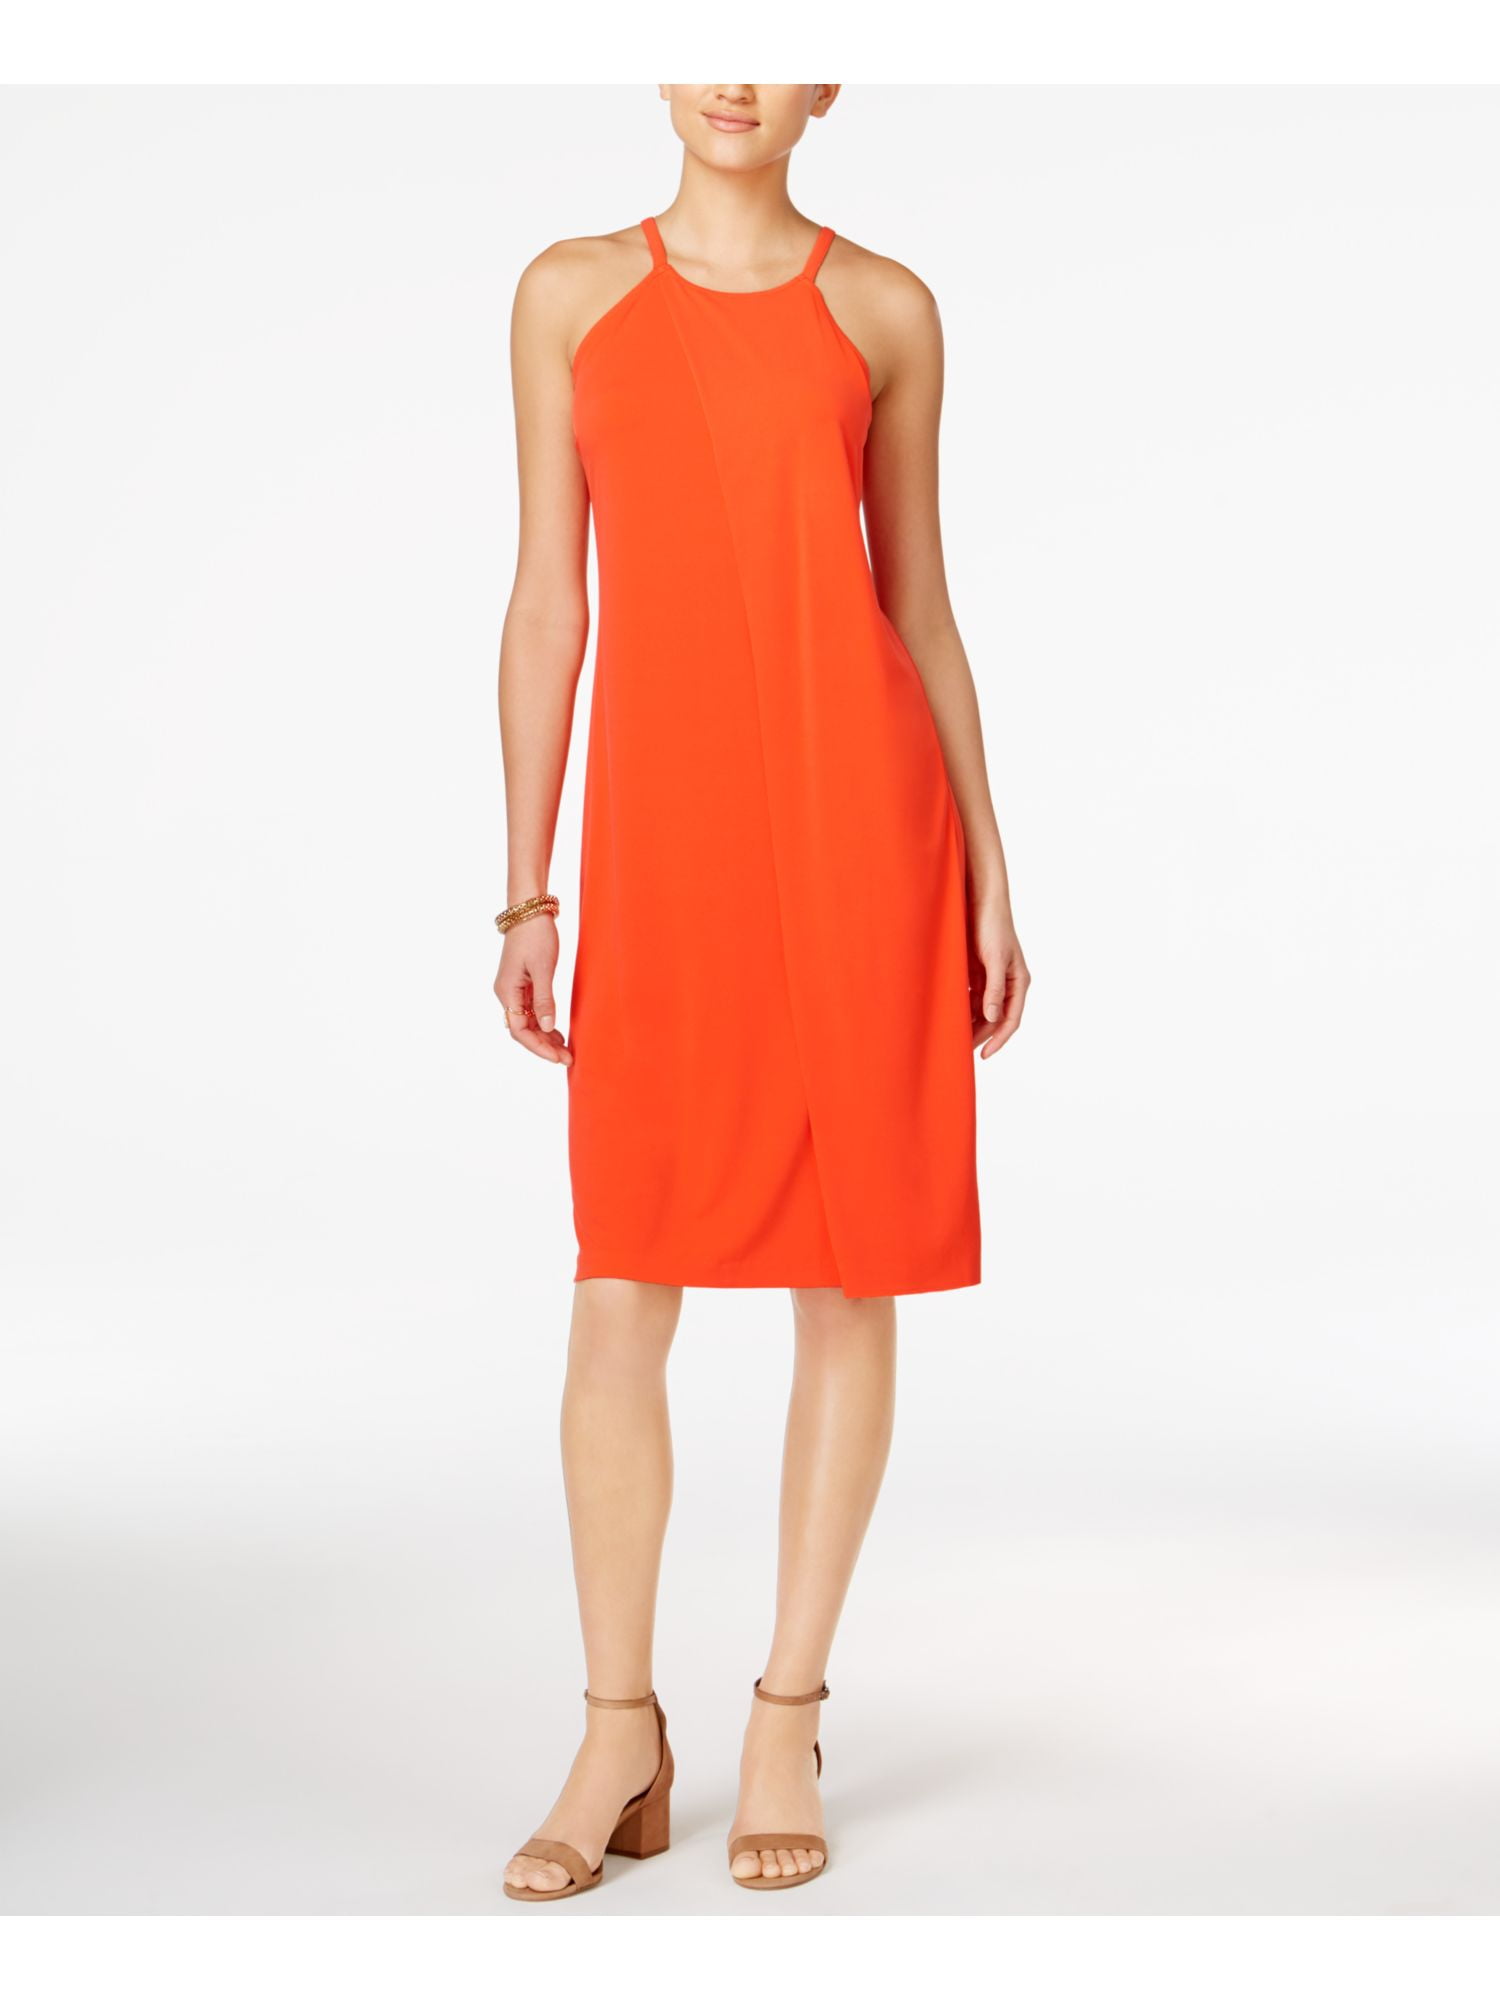 orange knee length dress